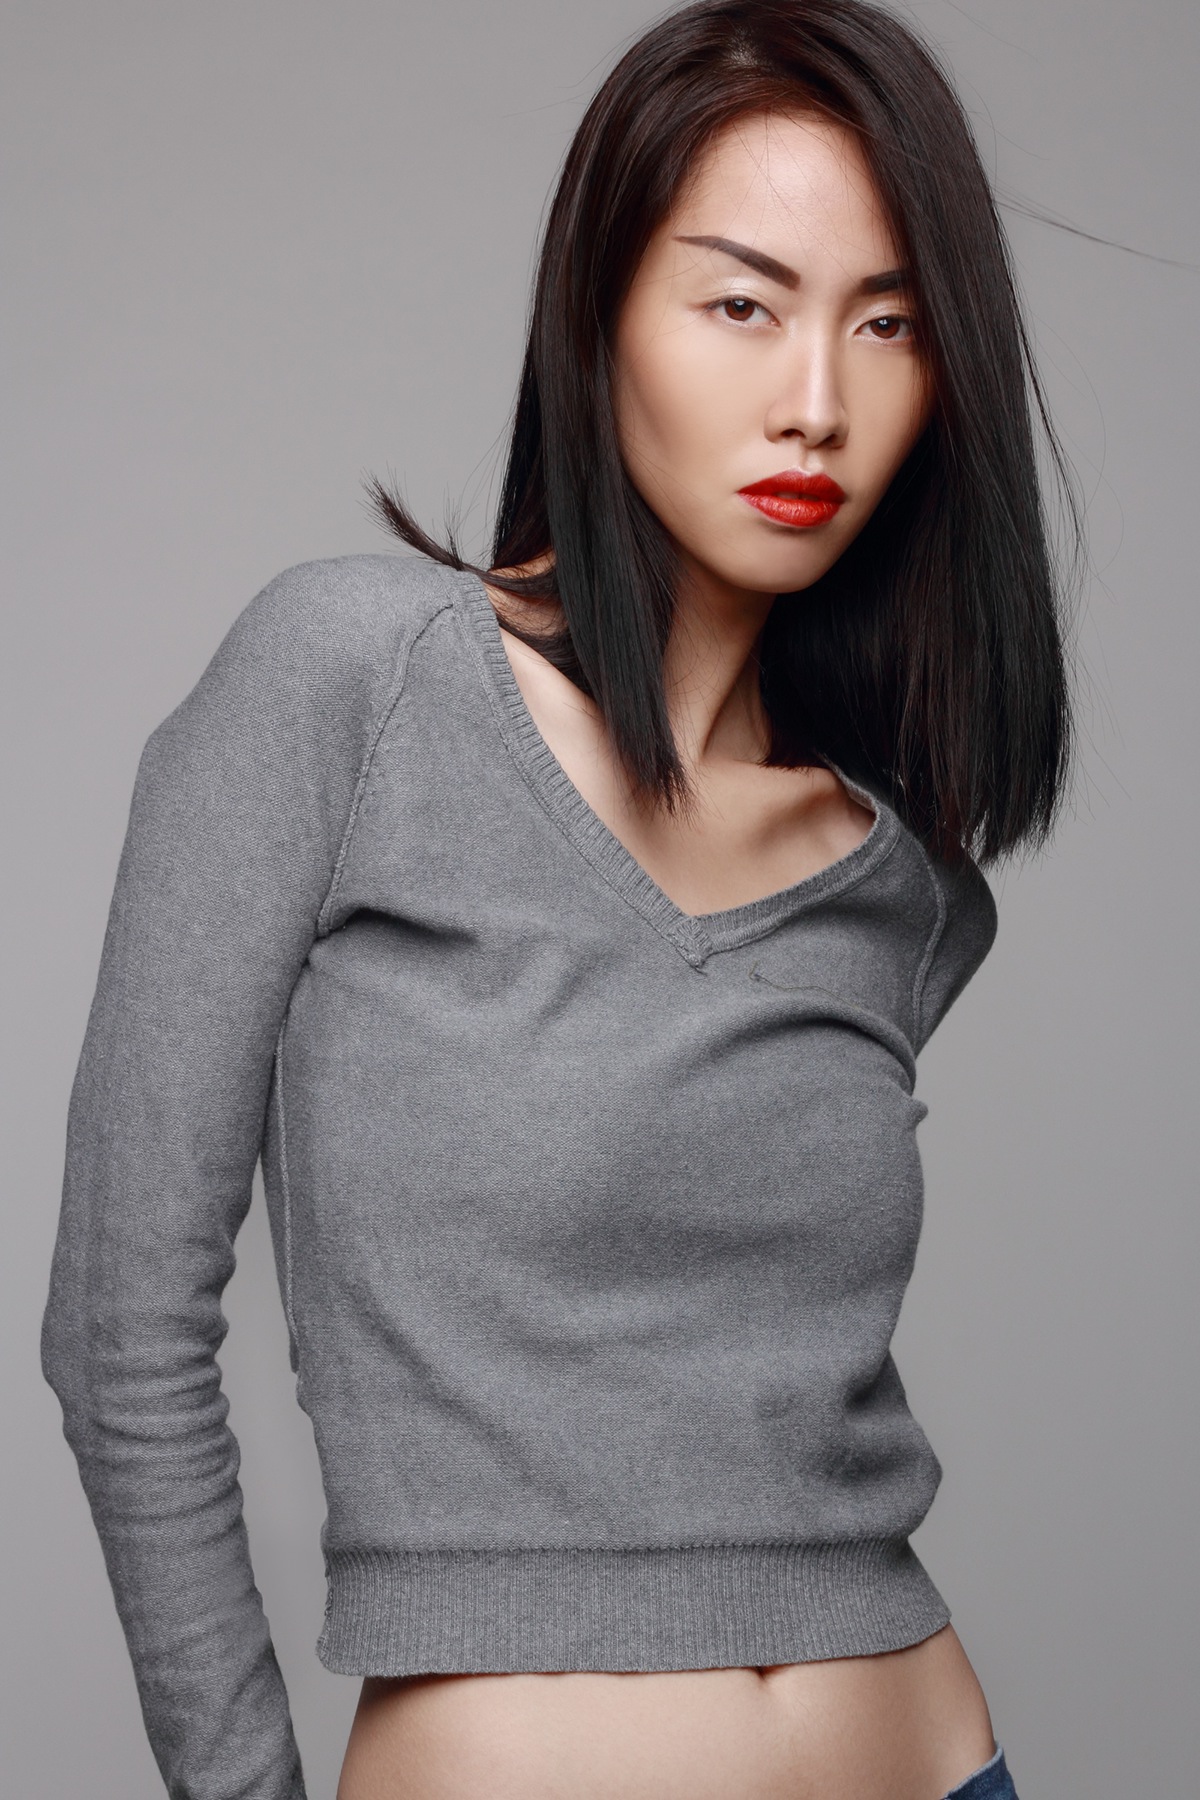 makeupartist niken xu larascream oriental beauty shot asian indonesia female model Cosmetic mac